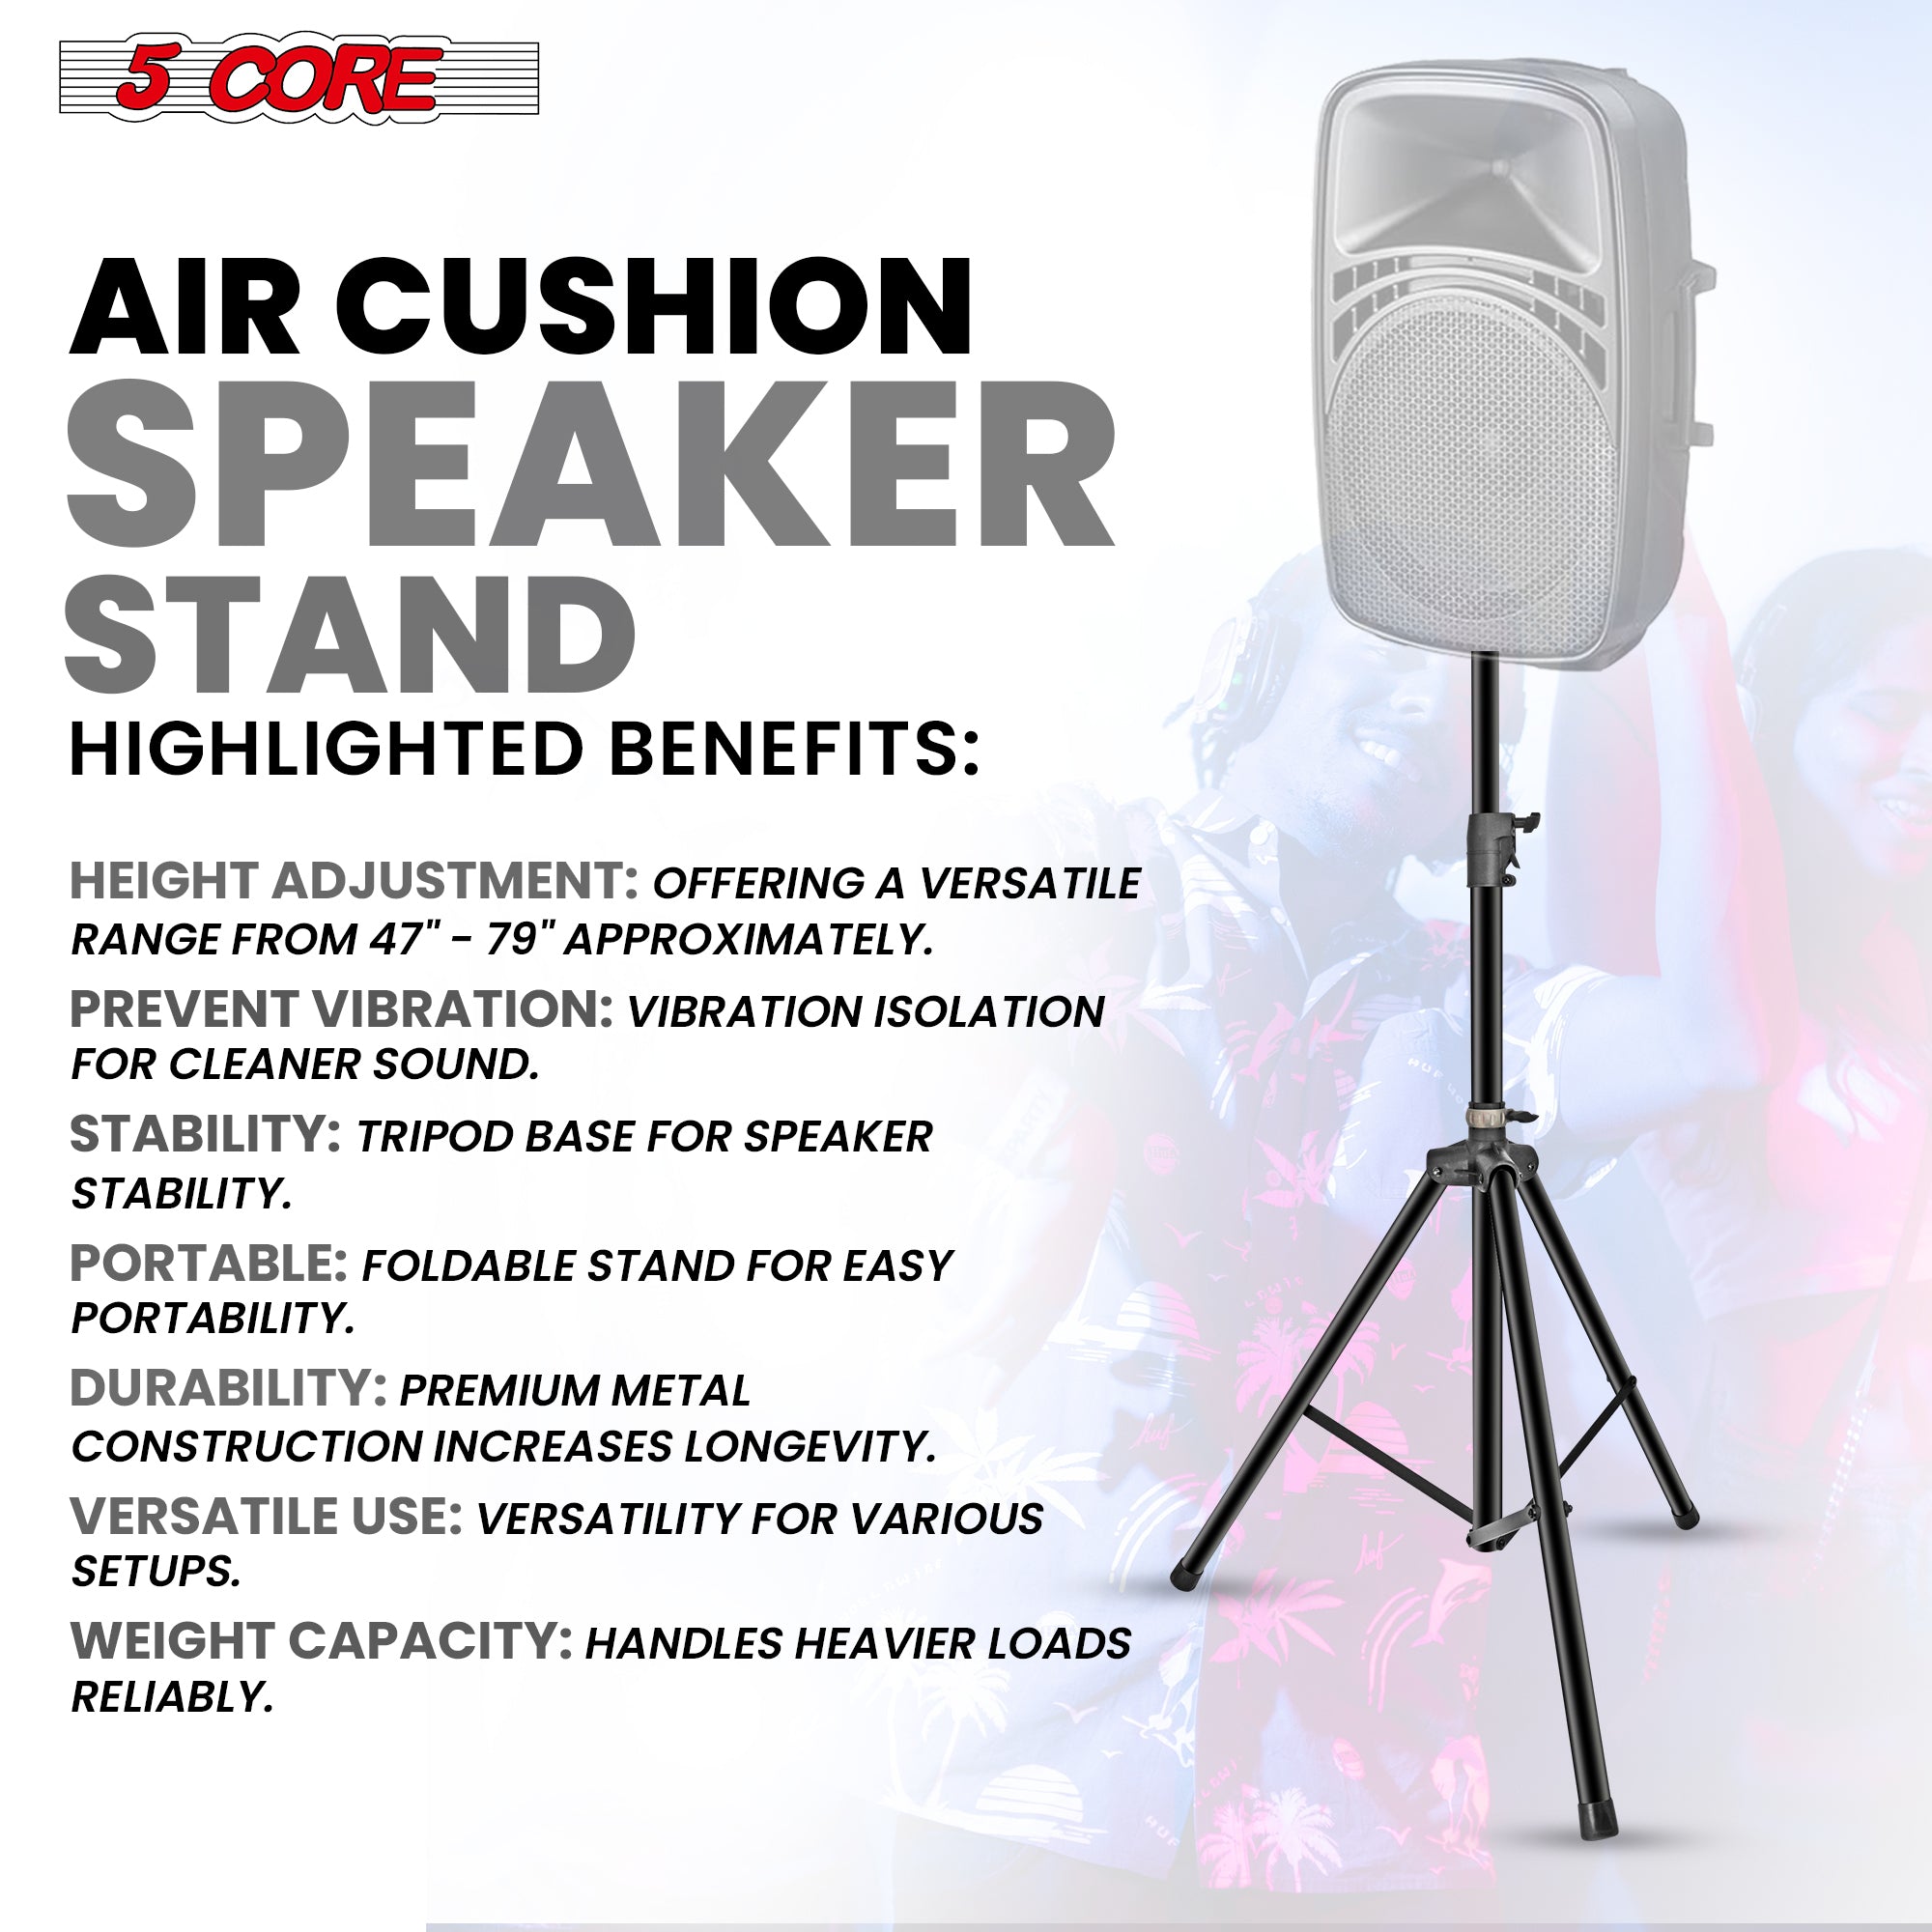 Air cushion speaker stand